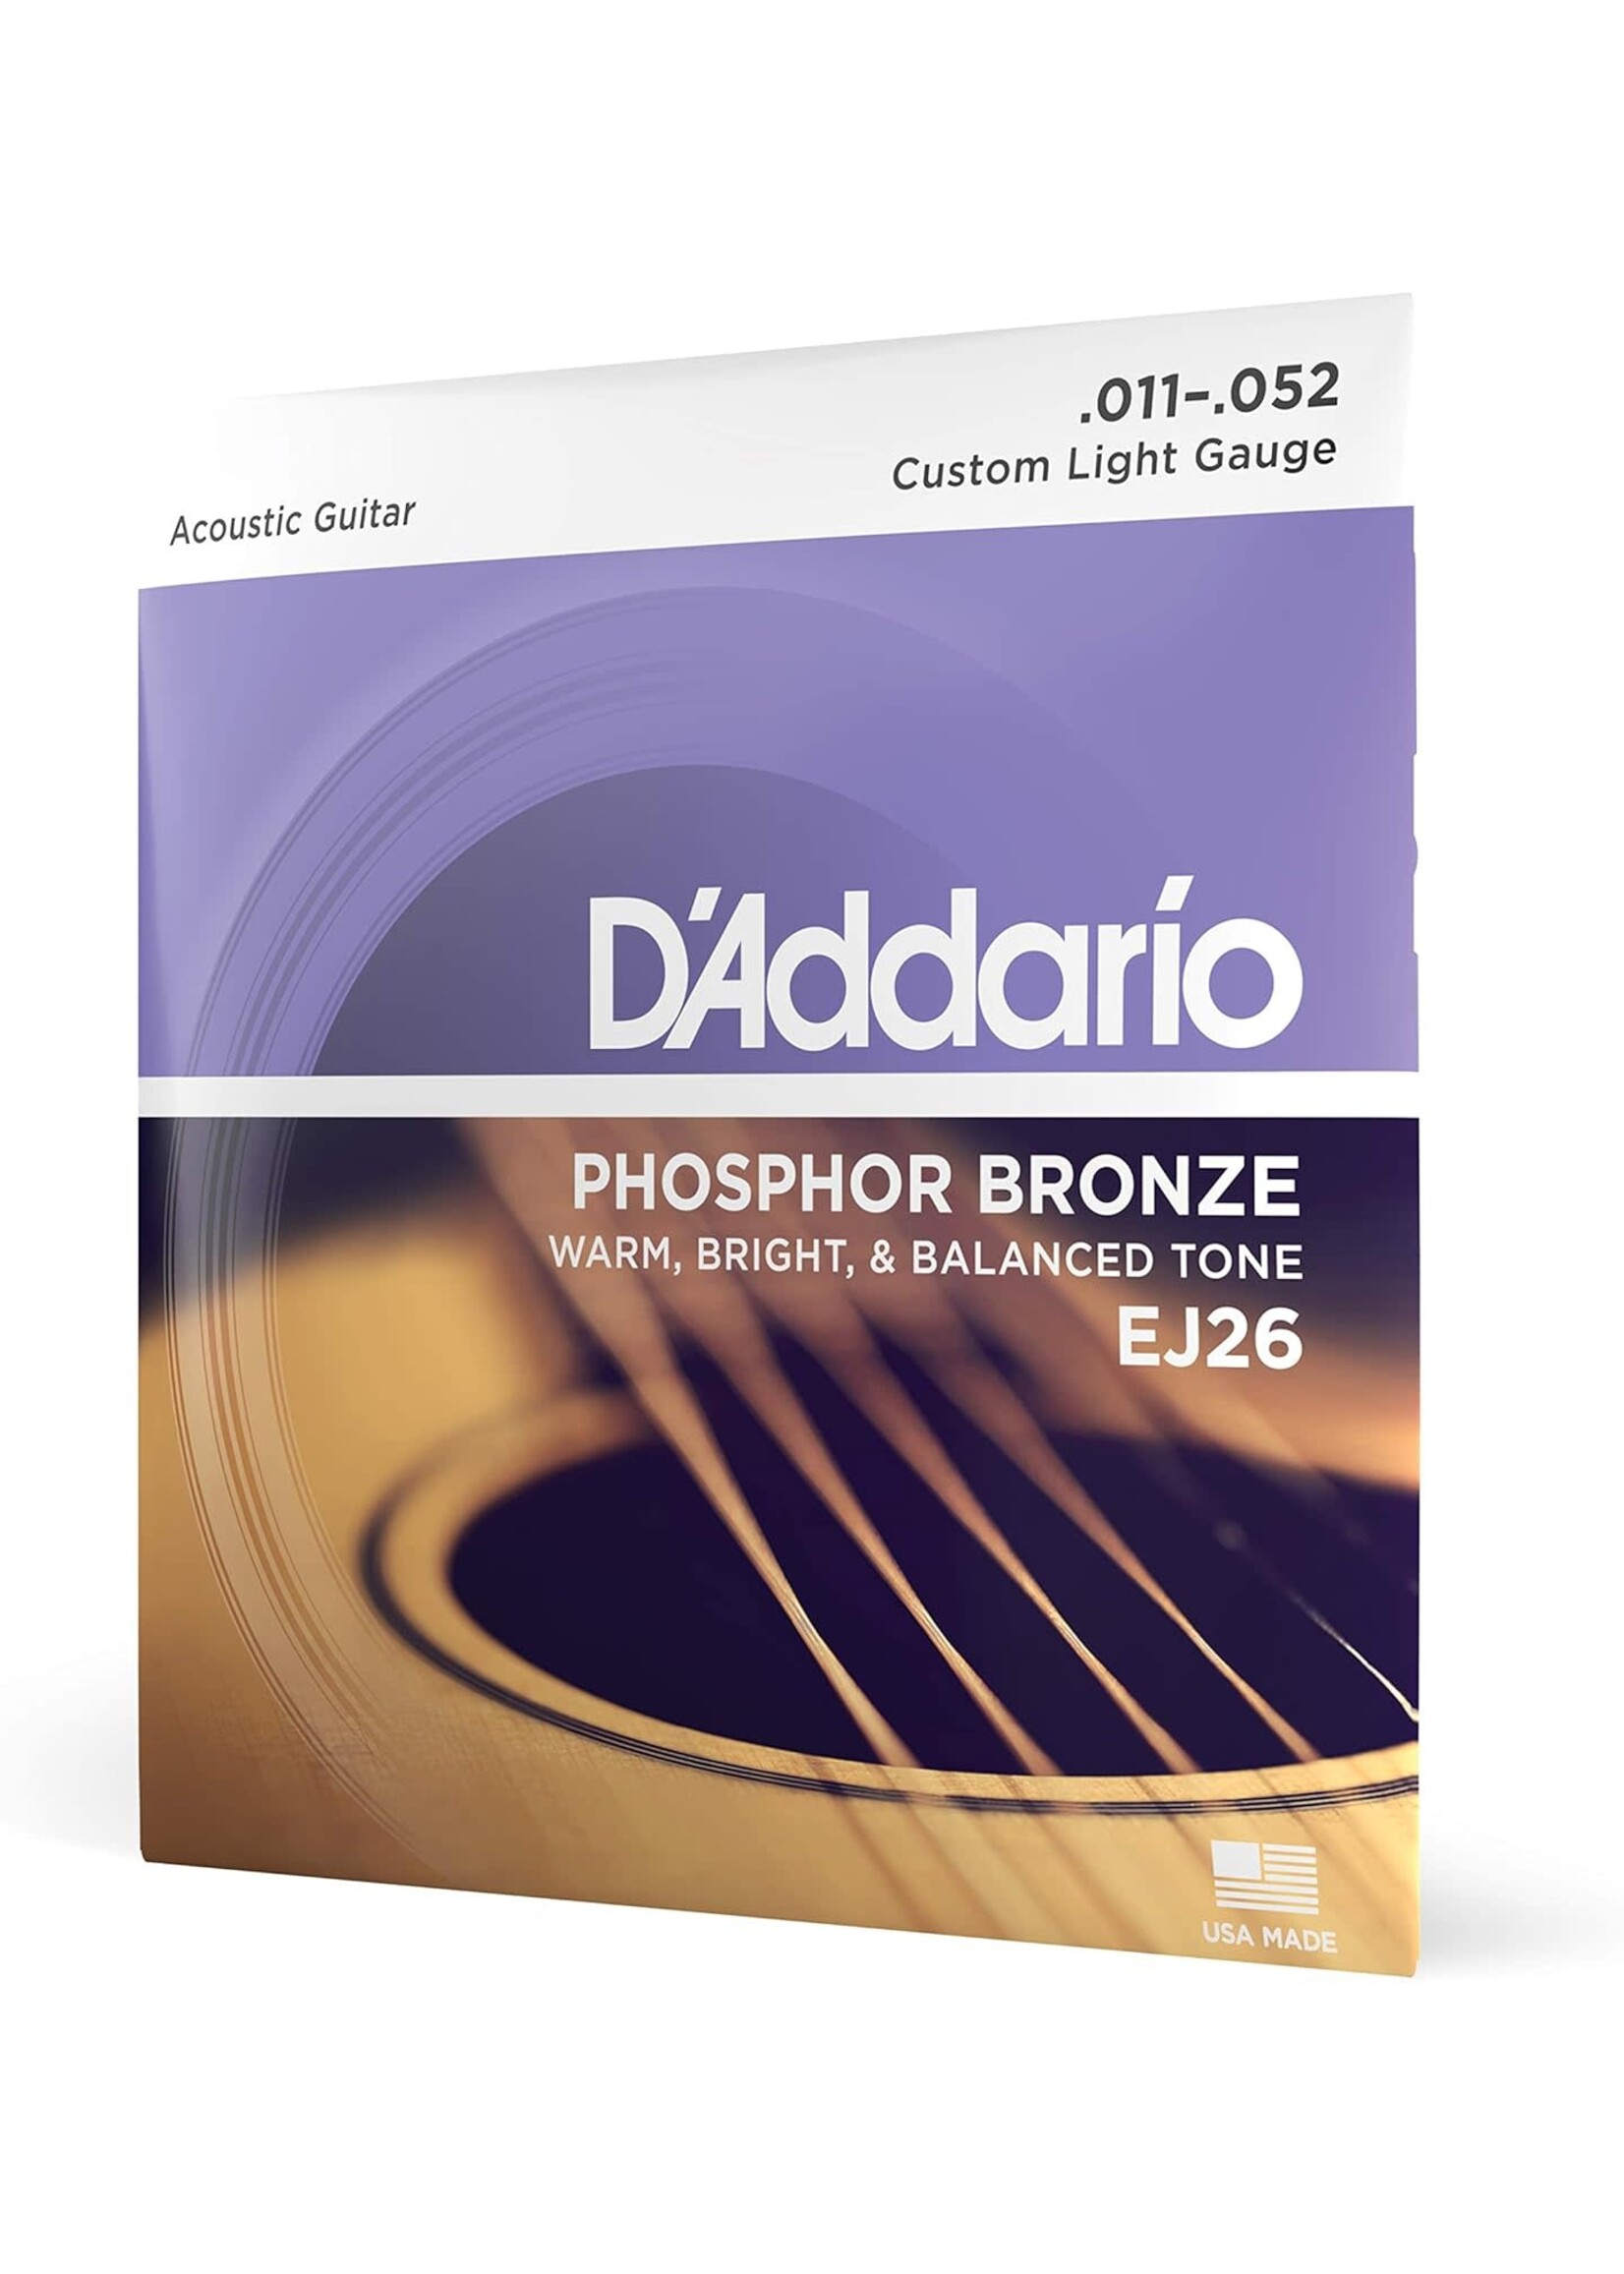 D'Addario D'Addario EJ26 Custom Light Gauge Phosphor Bronze